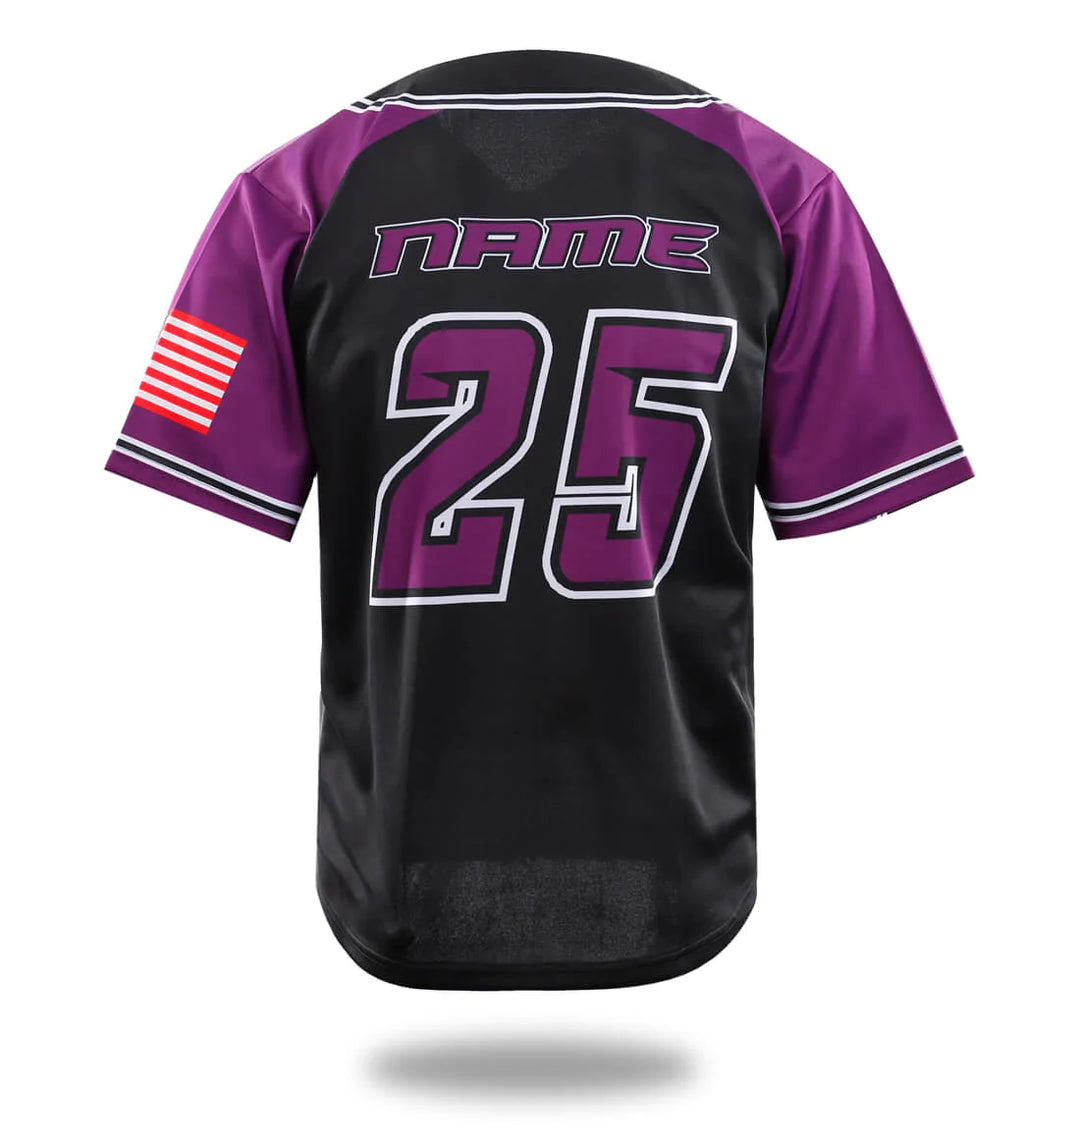 Vipers Black Purple Design Baseball Shirts